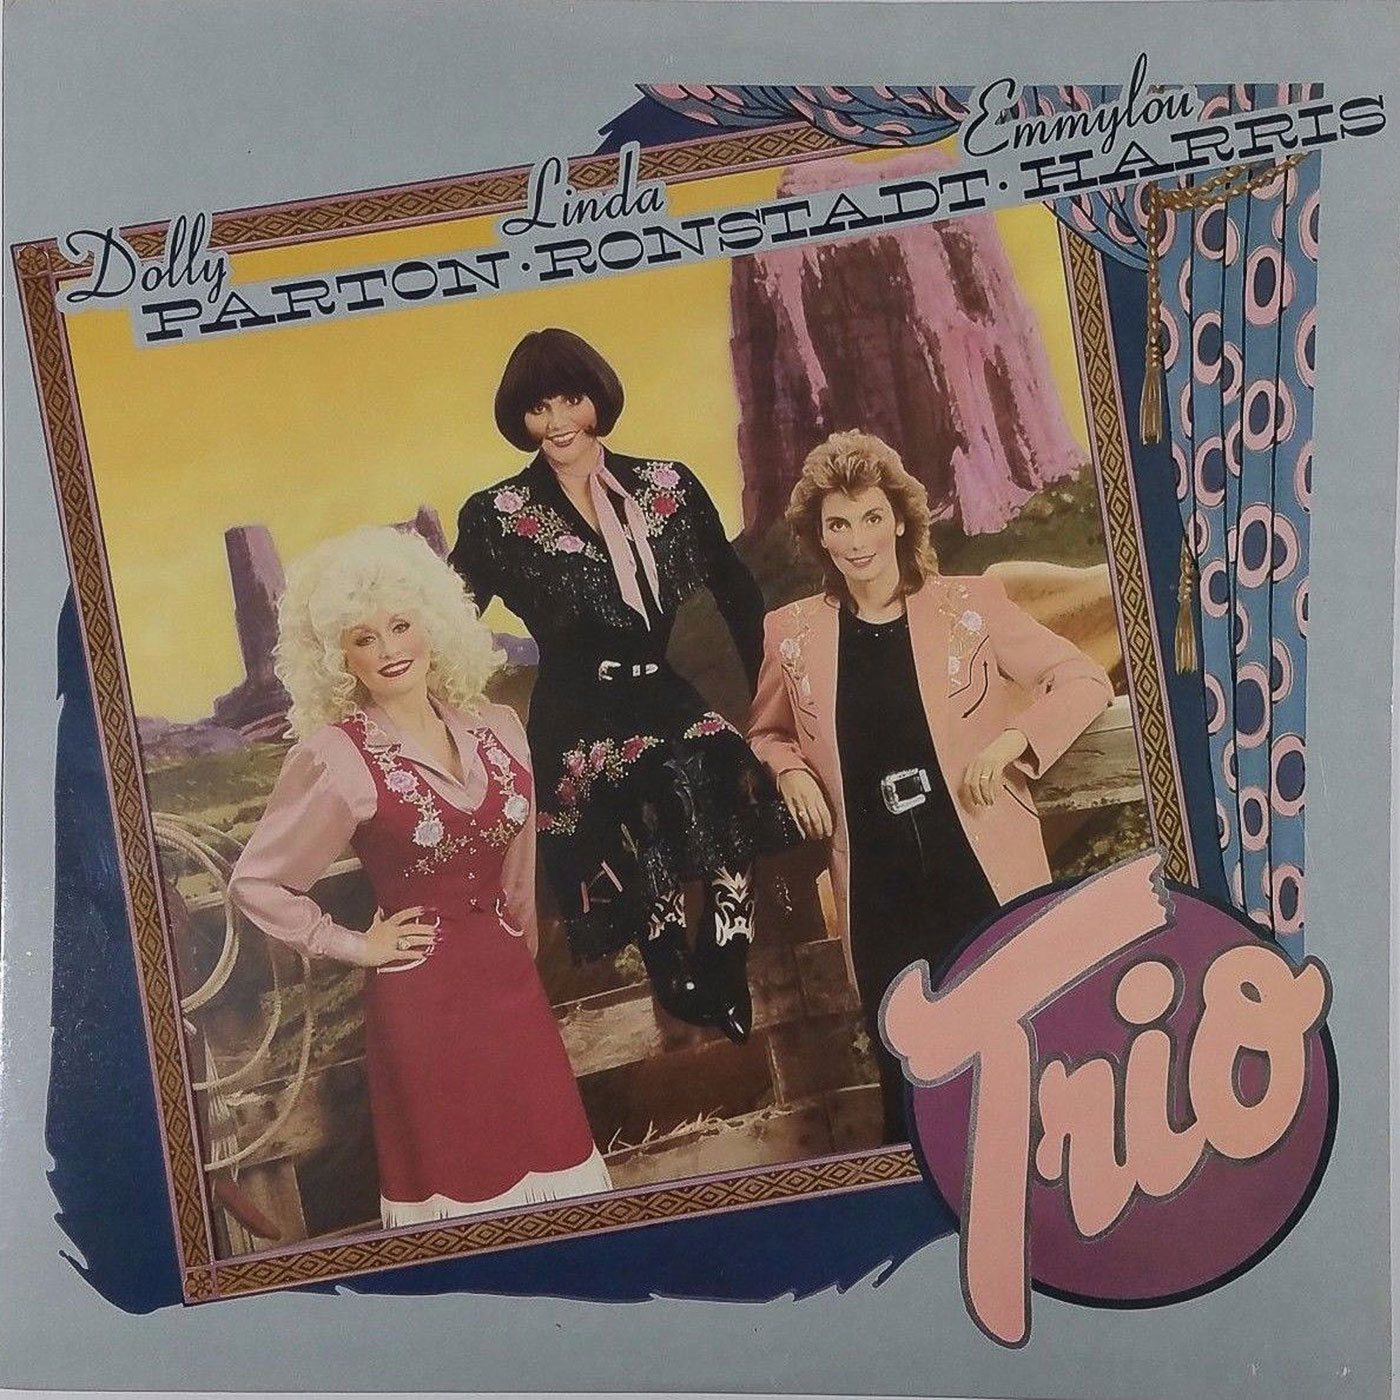 588 Dolly Parton Linda Ronstadt Emmylou Harris – Trio